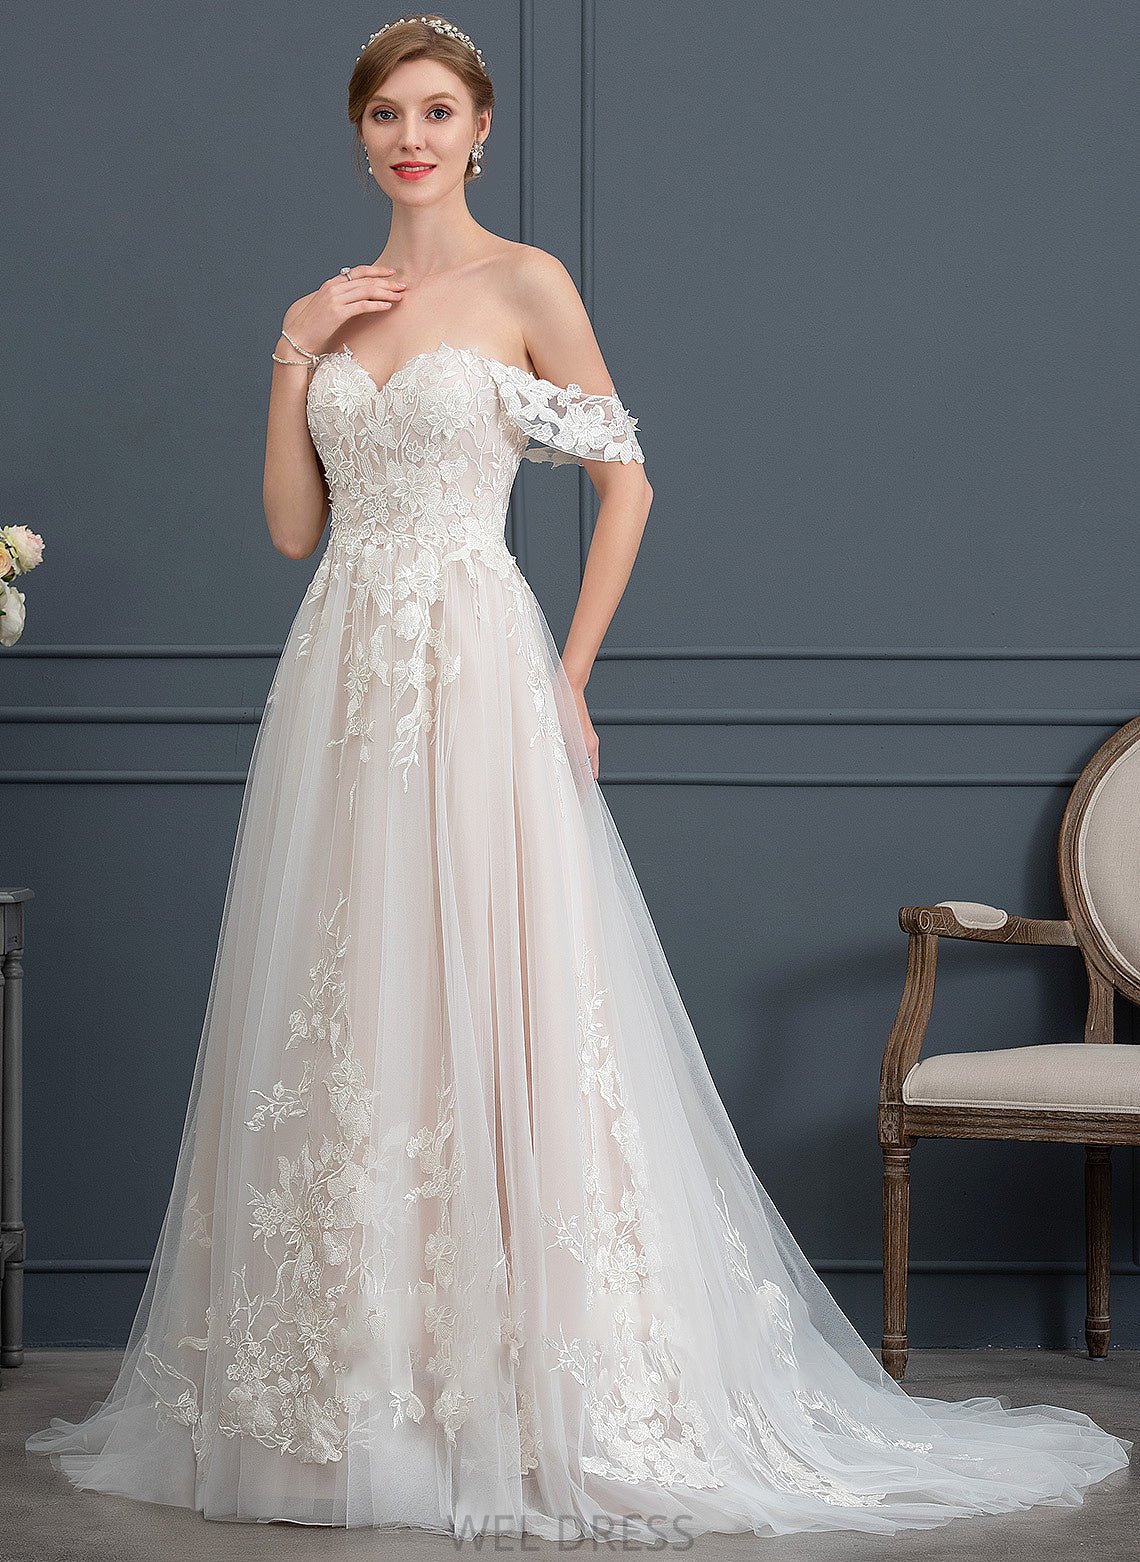 Dress Sweep Train Ball-Gown/Princess Kenna Wedding Dresses Wedding Sweetheart Tulle